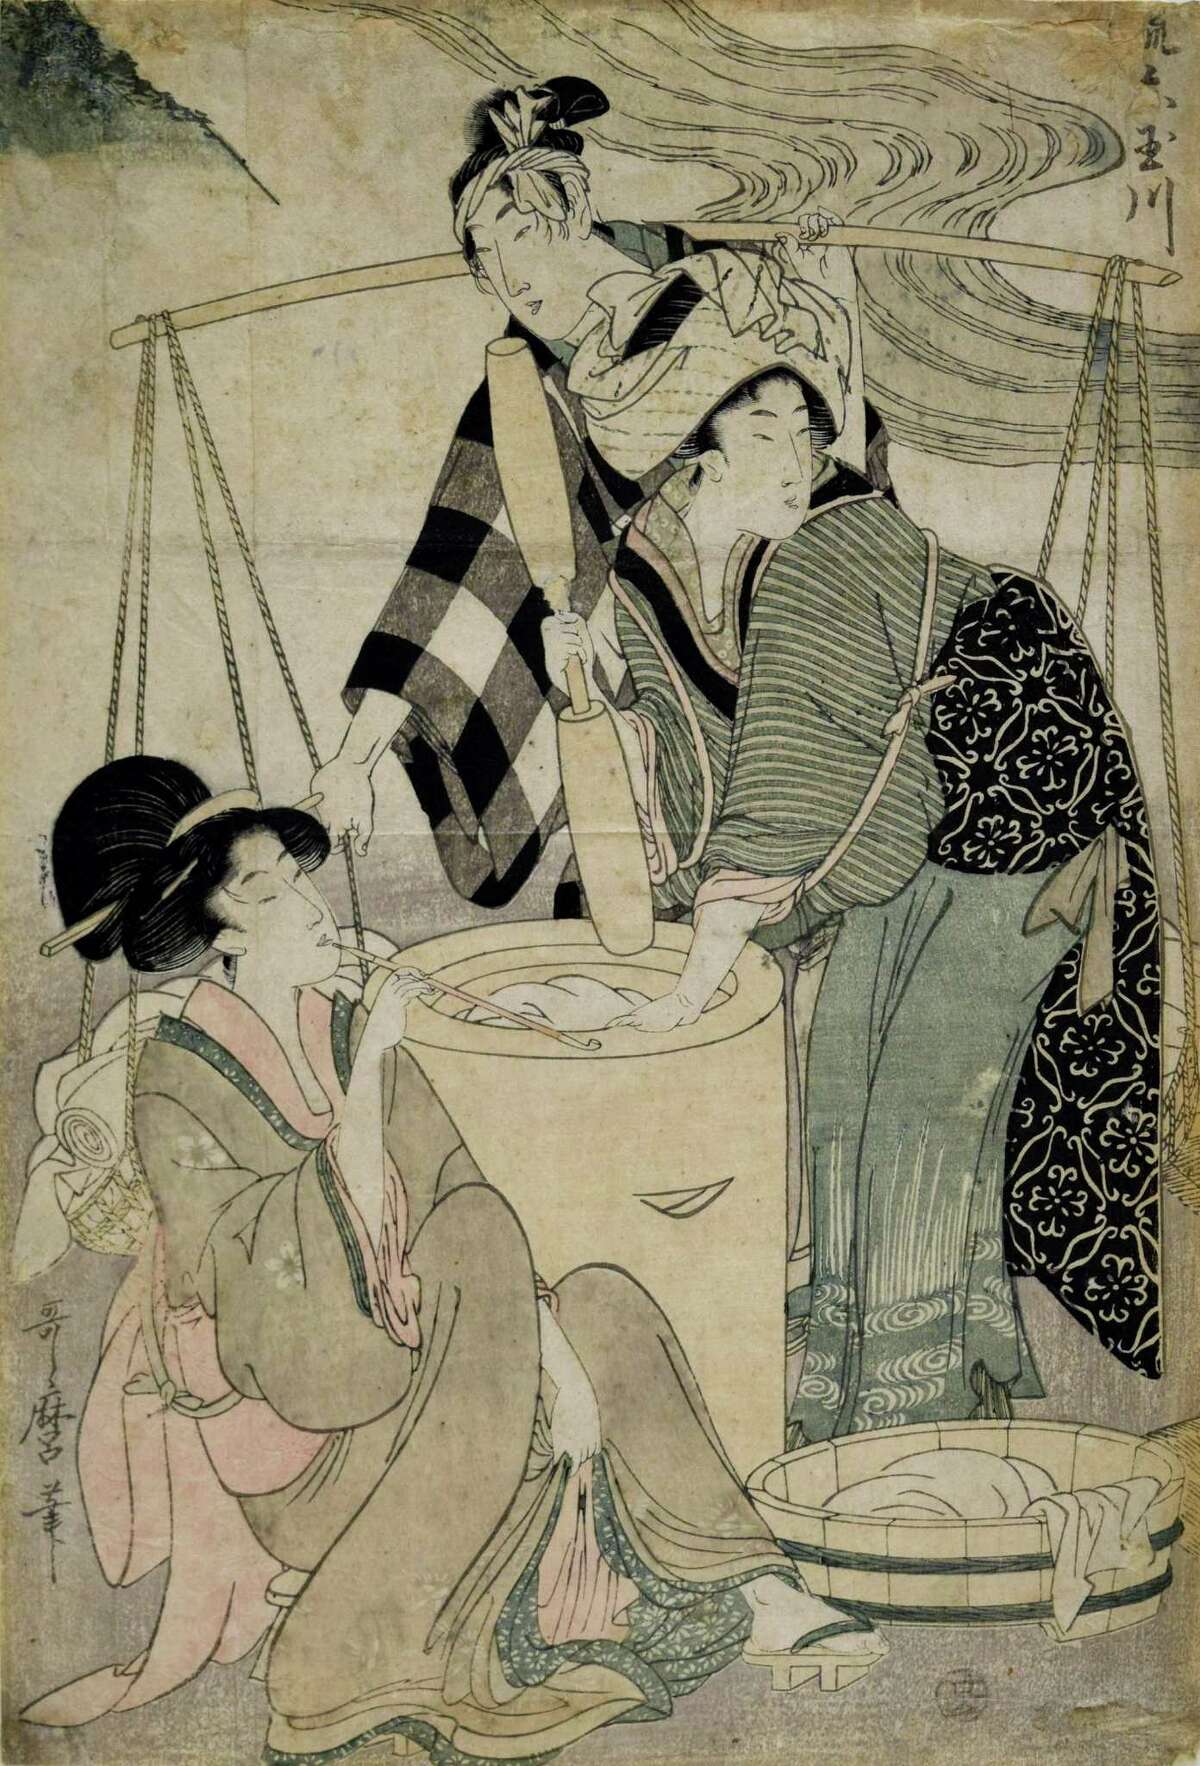 Kitagawa Utamaro (Japanese, 1753-1806) Mutamagawa, will be included in the Bruce Museum’s “Floating Beauty” exhibit.